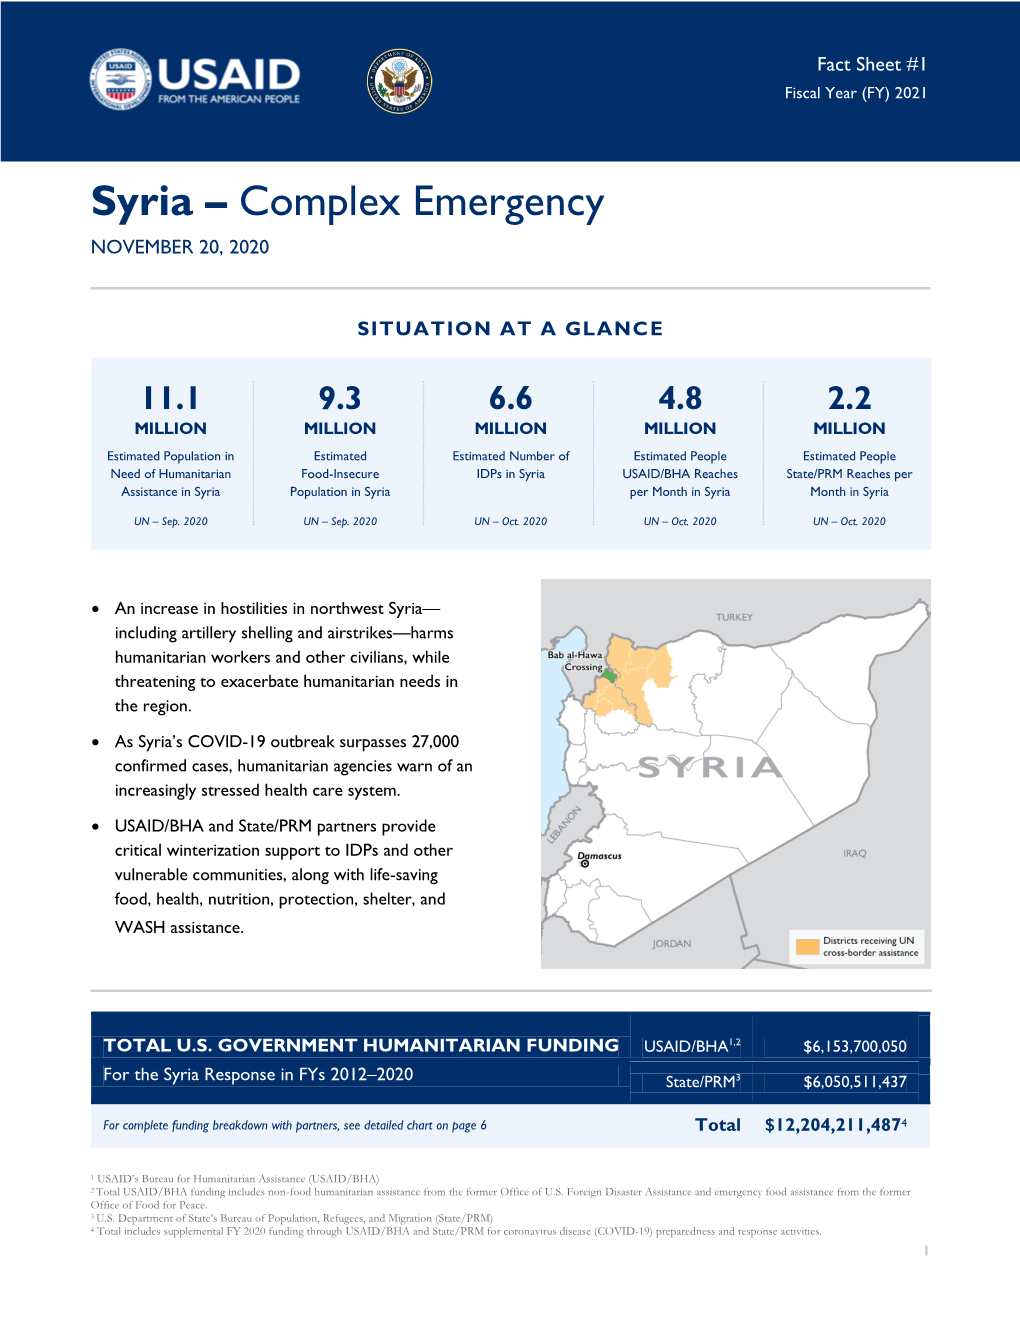 USG Syria Complex Emergency Fact Sheet #1